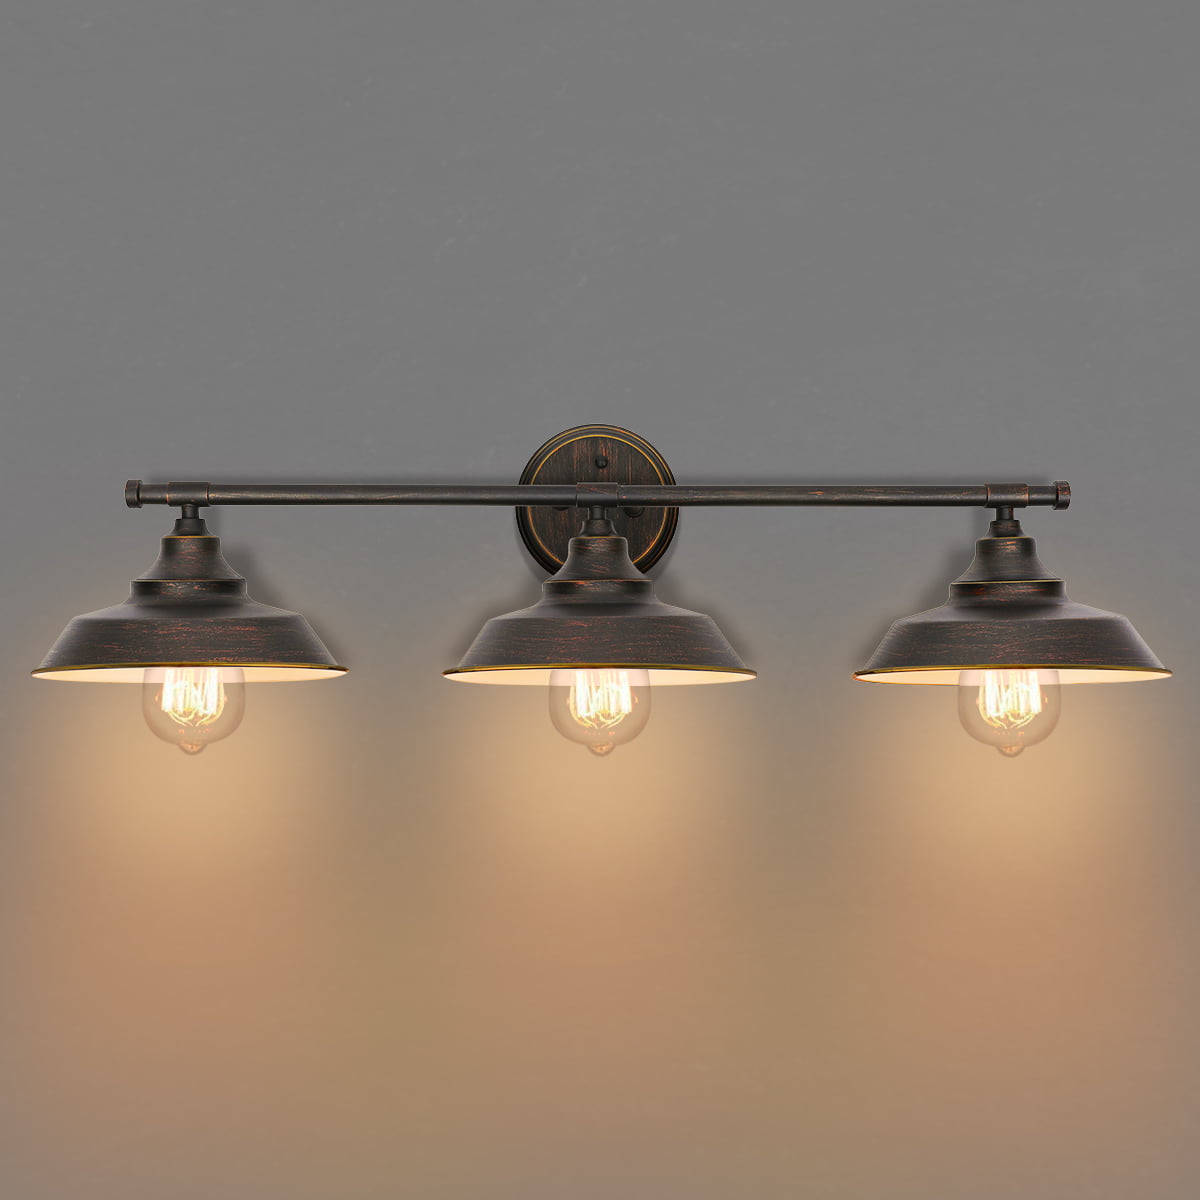 Industrial Farmhouse Style 3 Light, Oil Rubbed Bronze Bathroom Light Fixtures